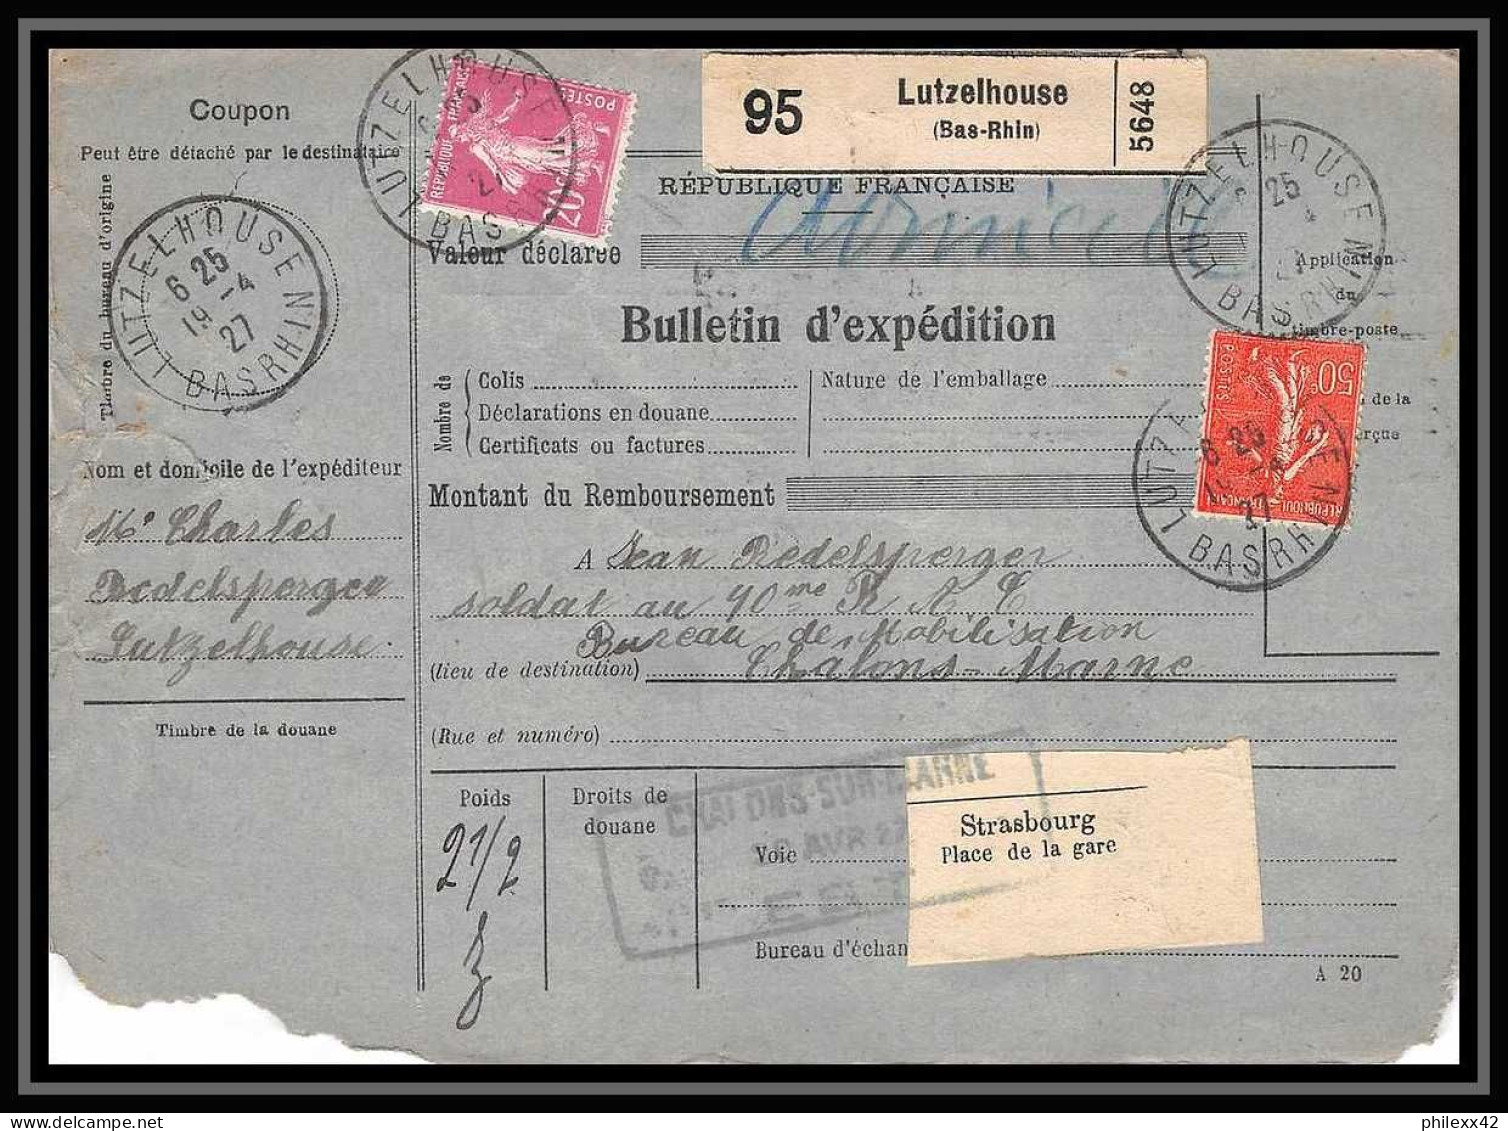 25095 Bulletin D'expédition France Colis Postaux Fiscal Bas Rhin - 1927 Lutzelhouse Merson 145 Alsace-Lorraine  - Storia Postale